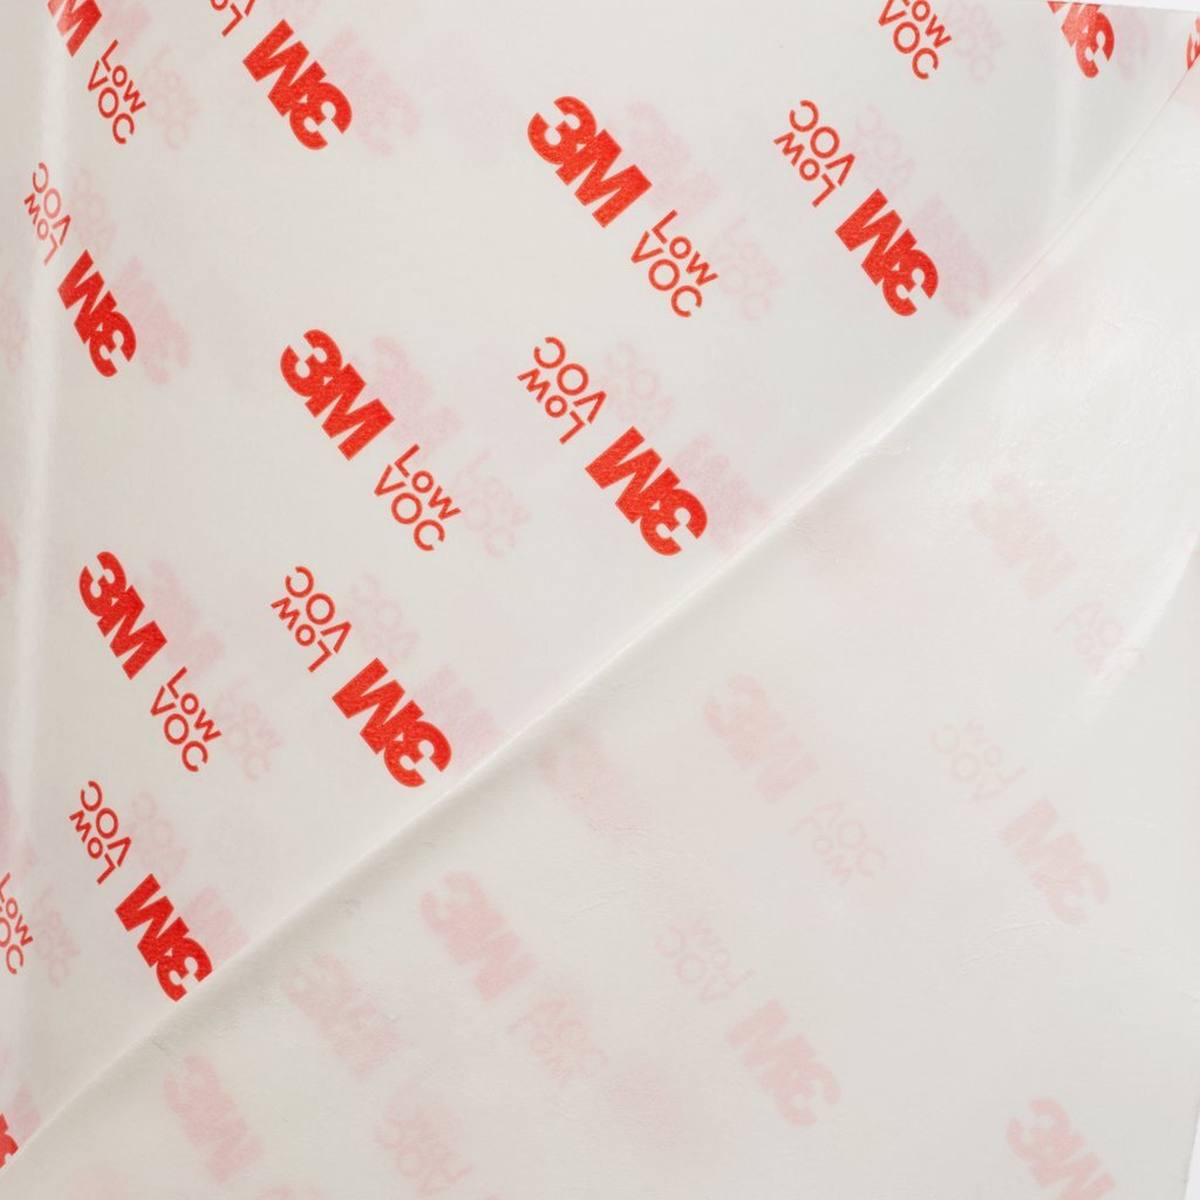 3M Dubbelzijdig plakband met vliespapier als rug 99015LVC, wit, 19 mm x 50 m, 0,15 mm